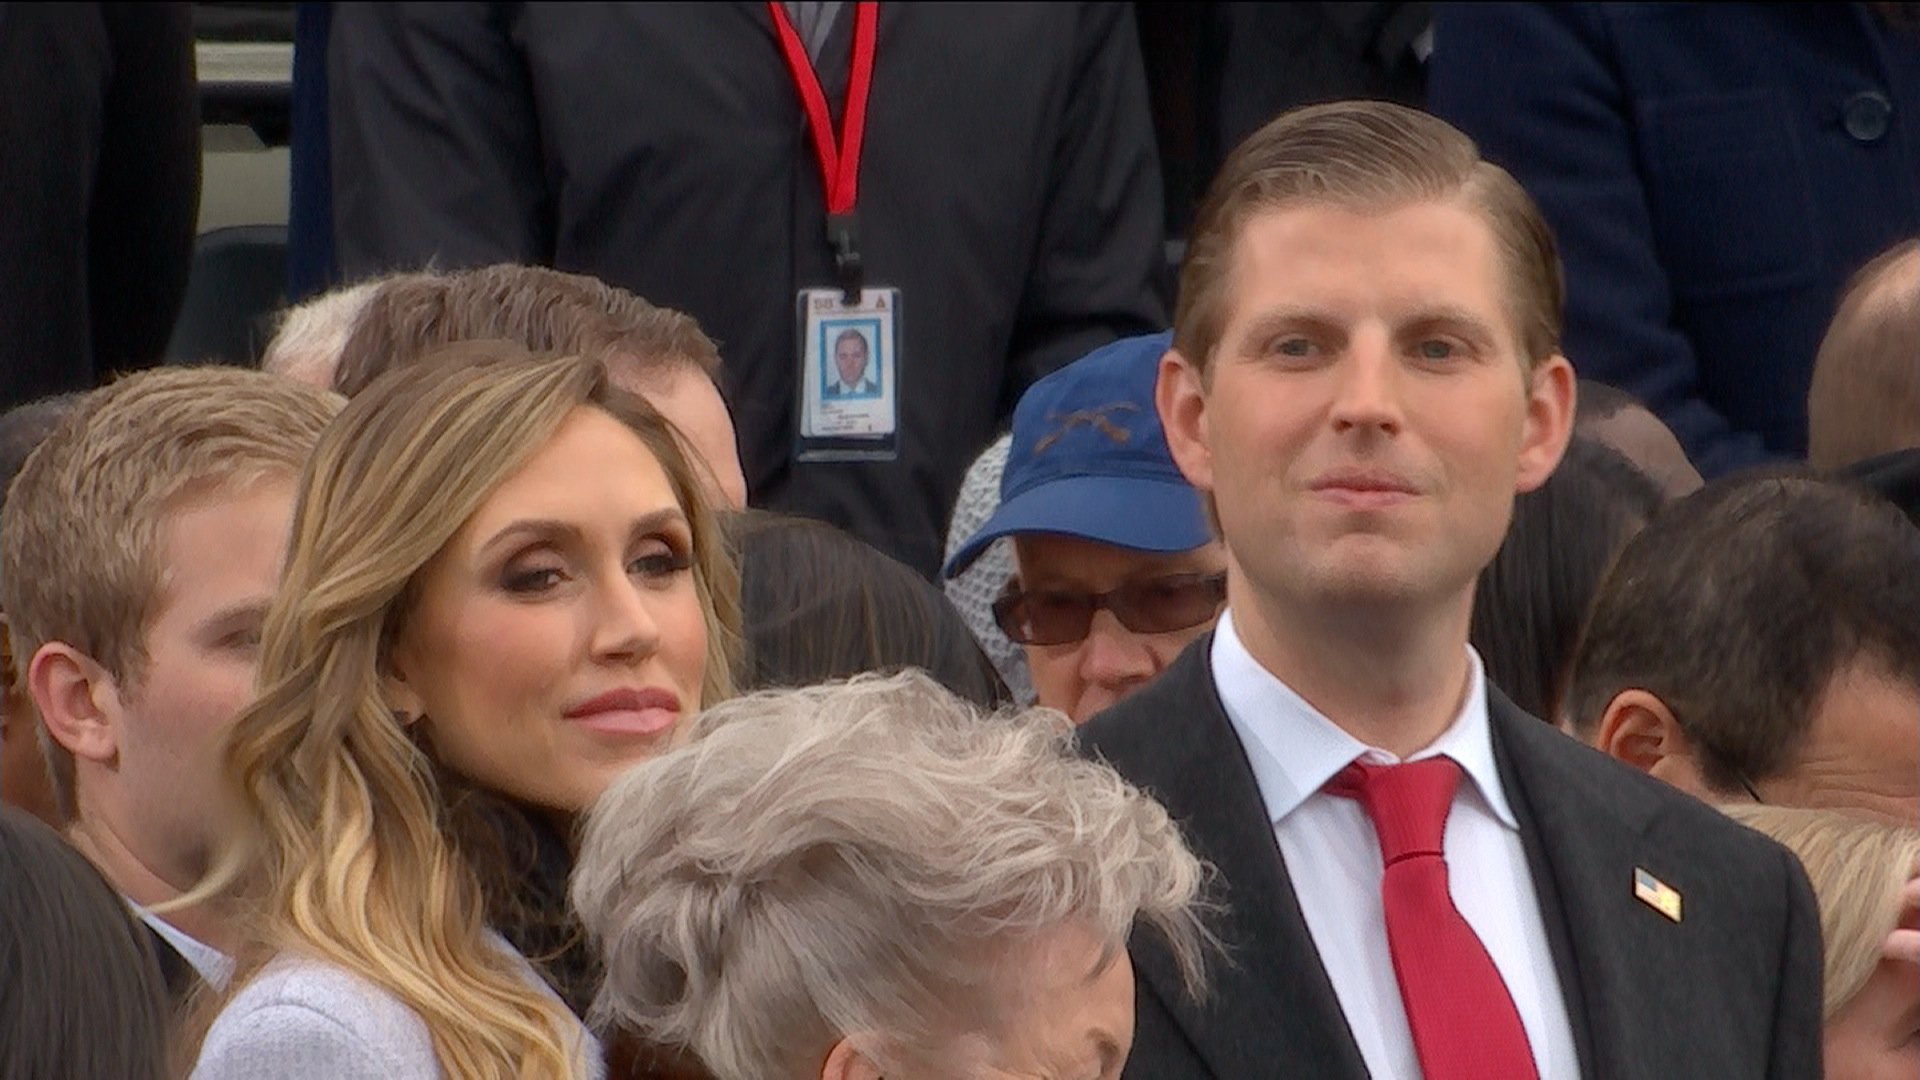 Eric Trump and his wife Lara at the inauguration.